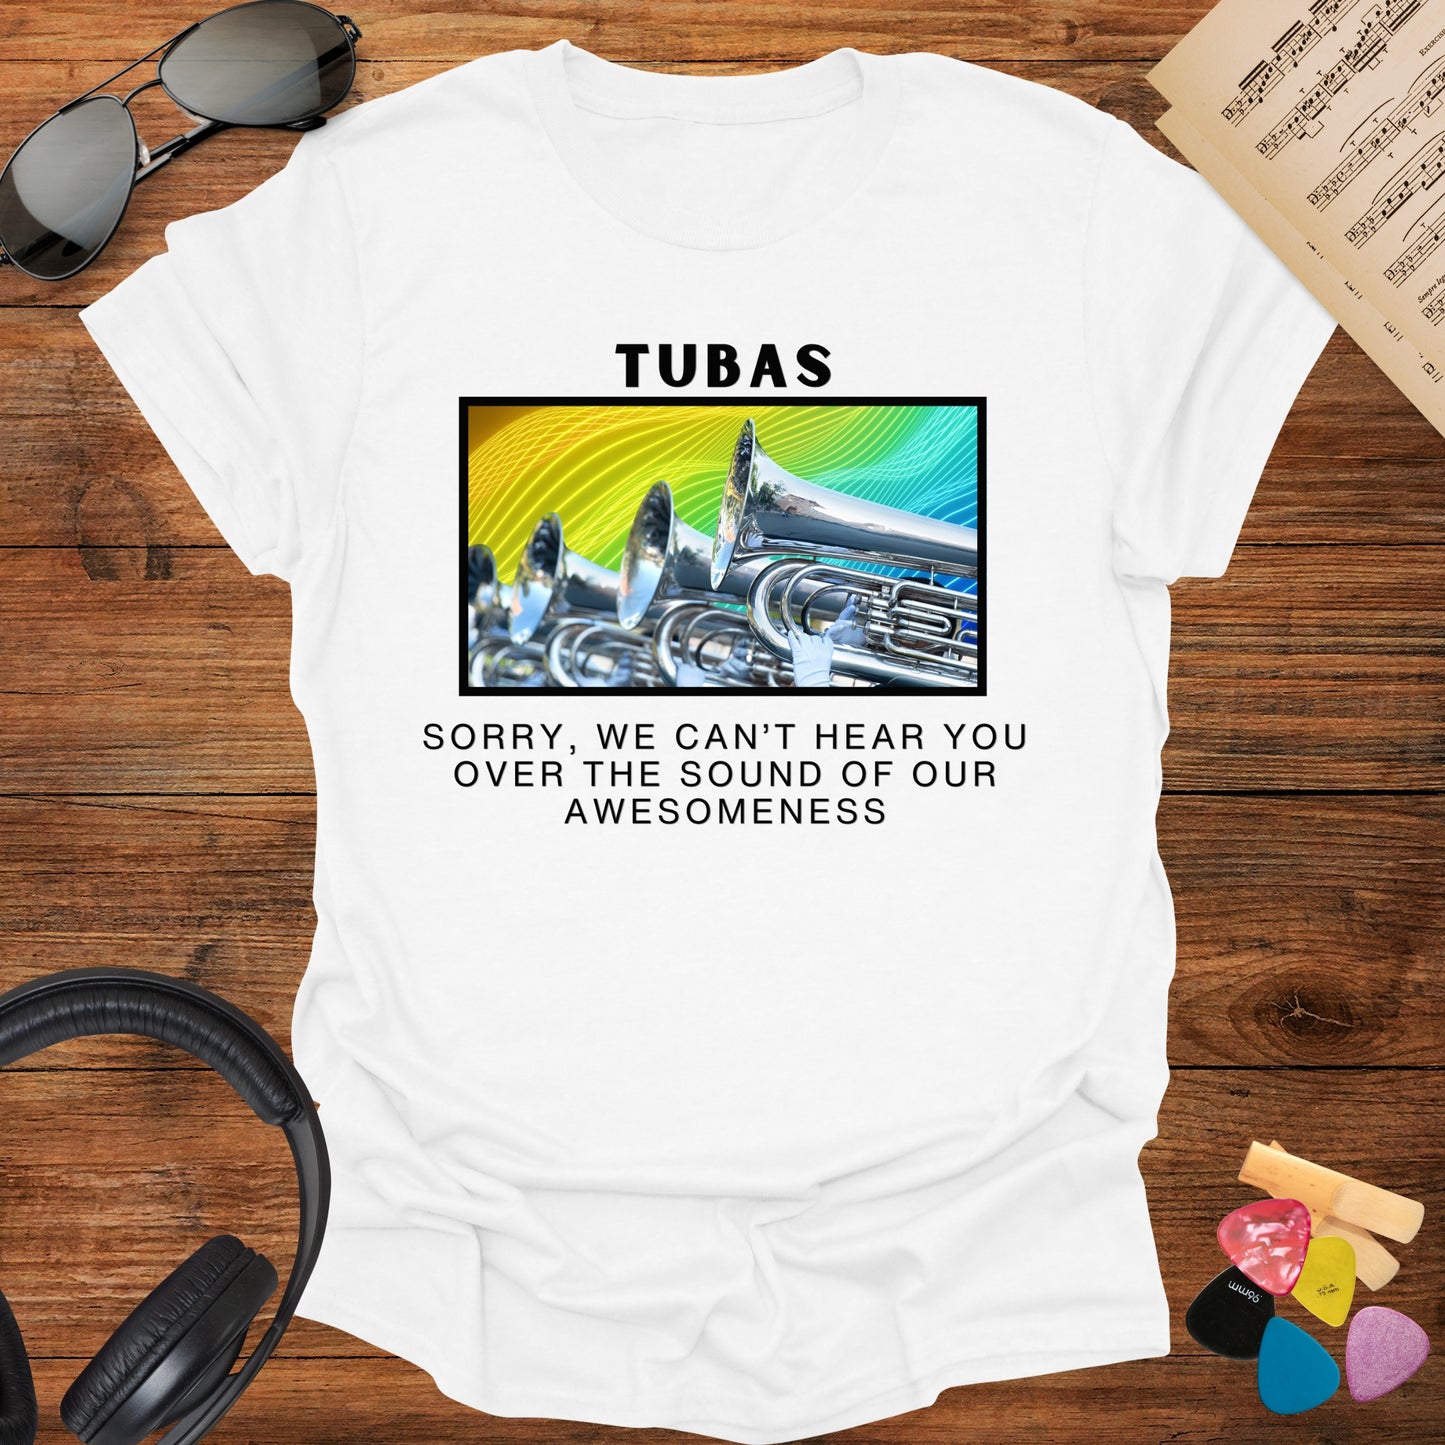 Tuba Awesomeness T-Shirt